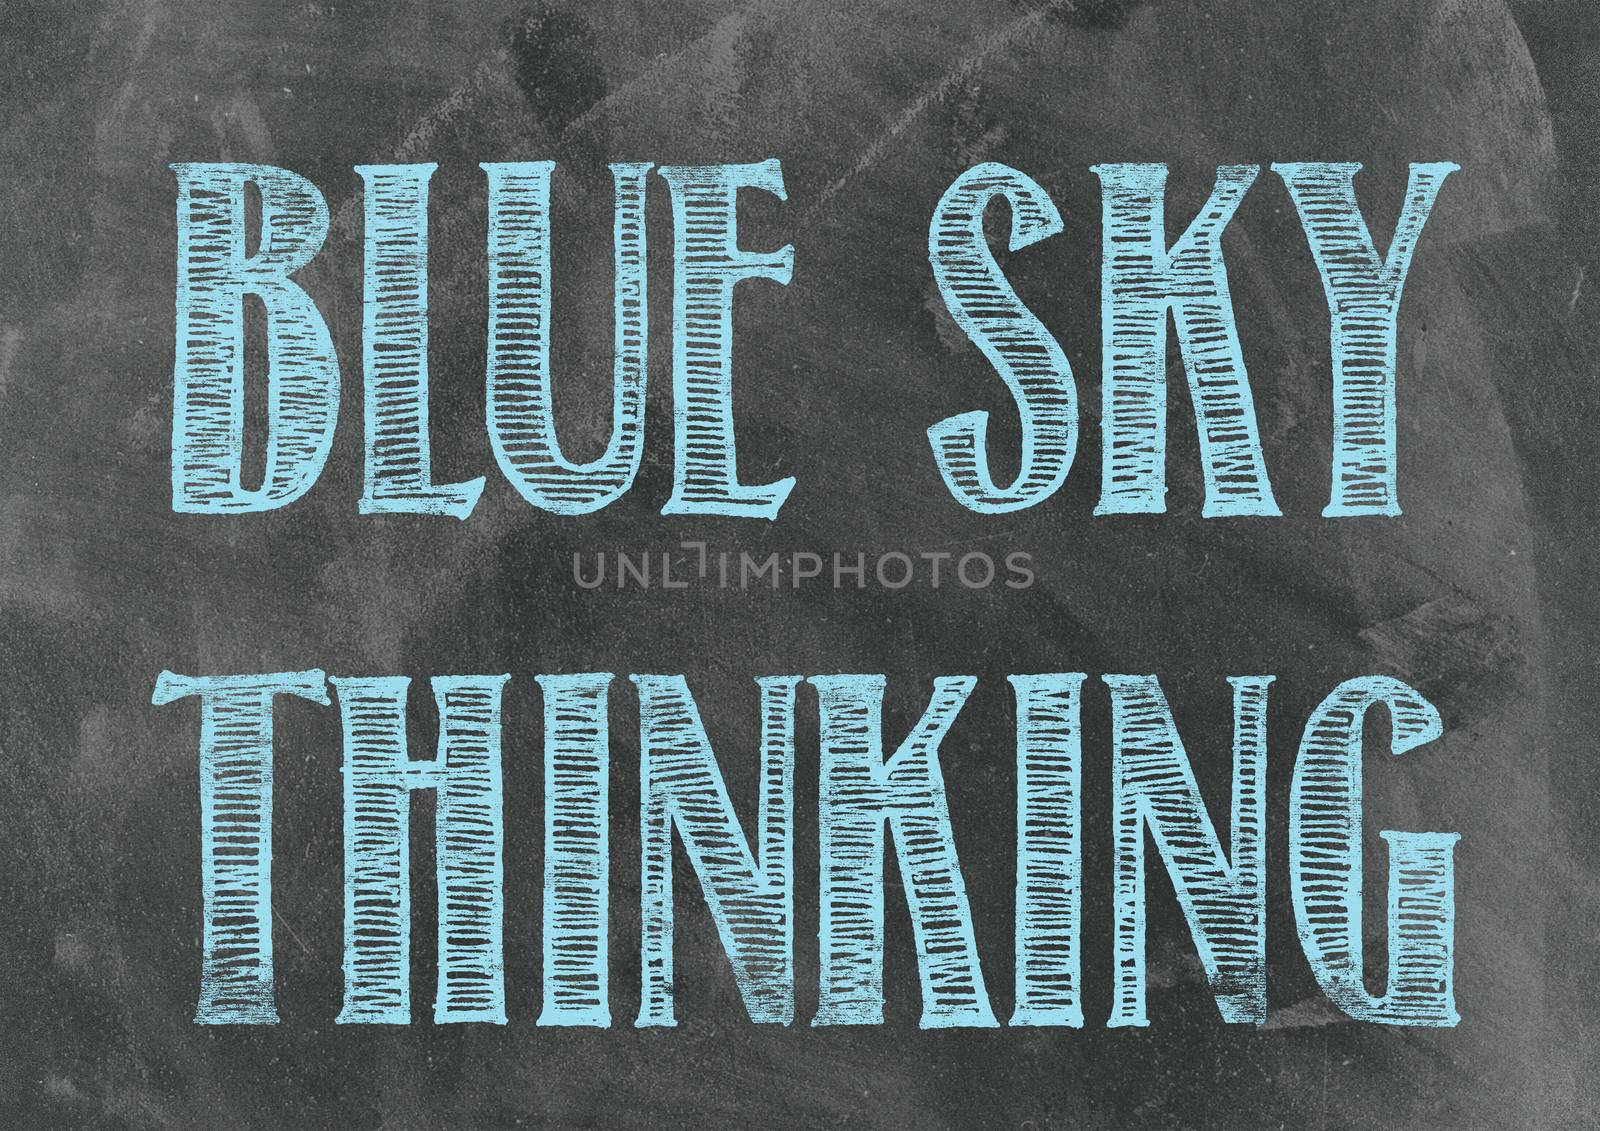 Blue Sky Thinking on a Blackboard by urbanbuzz